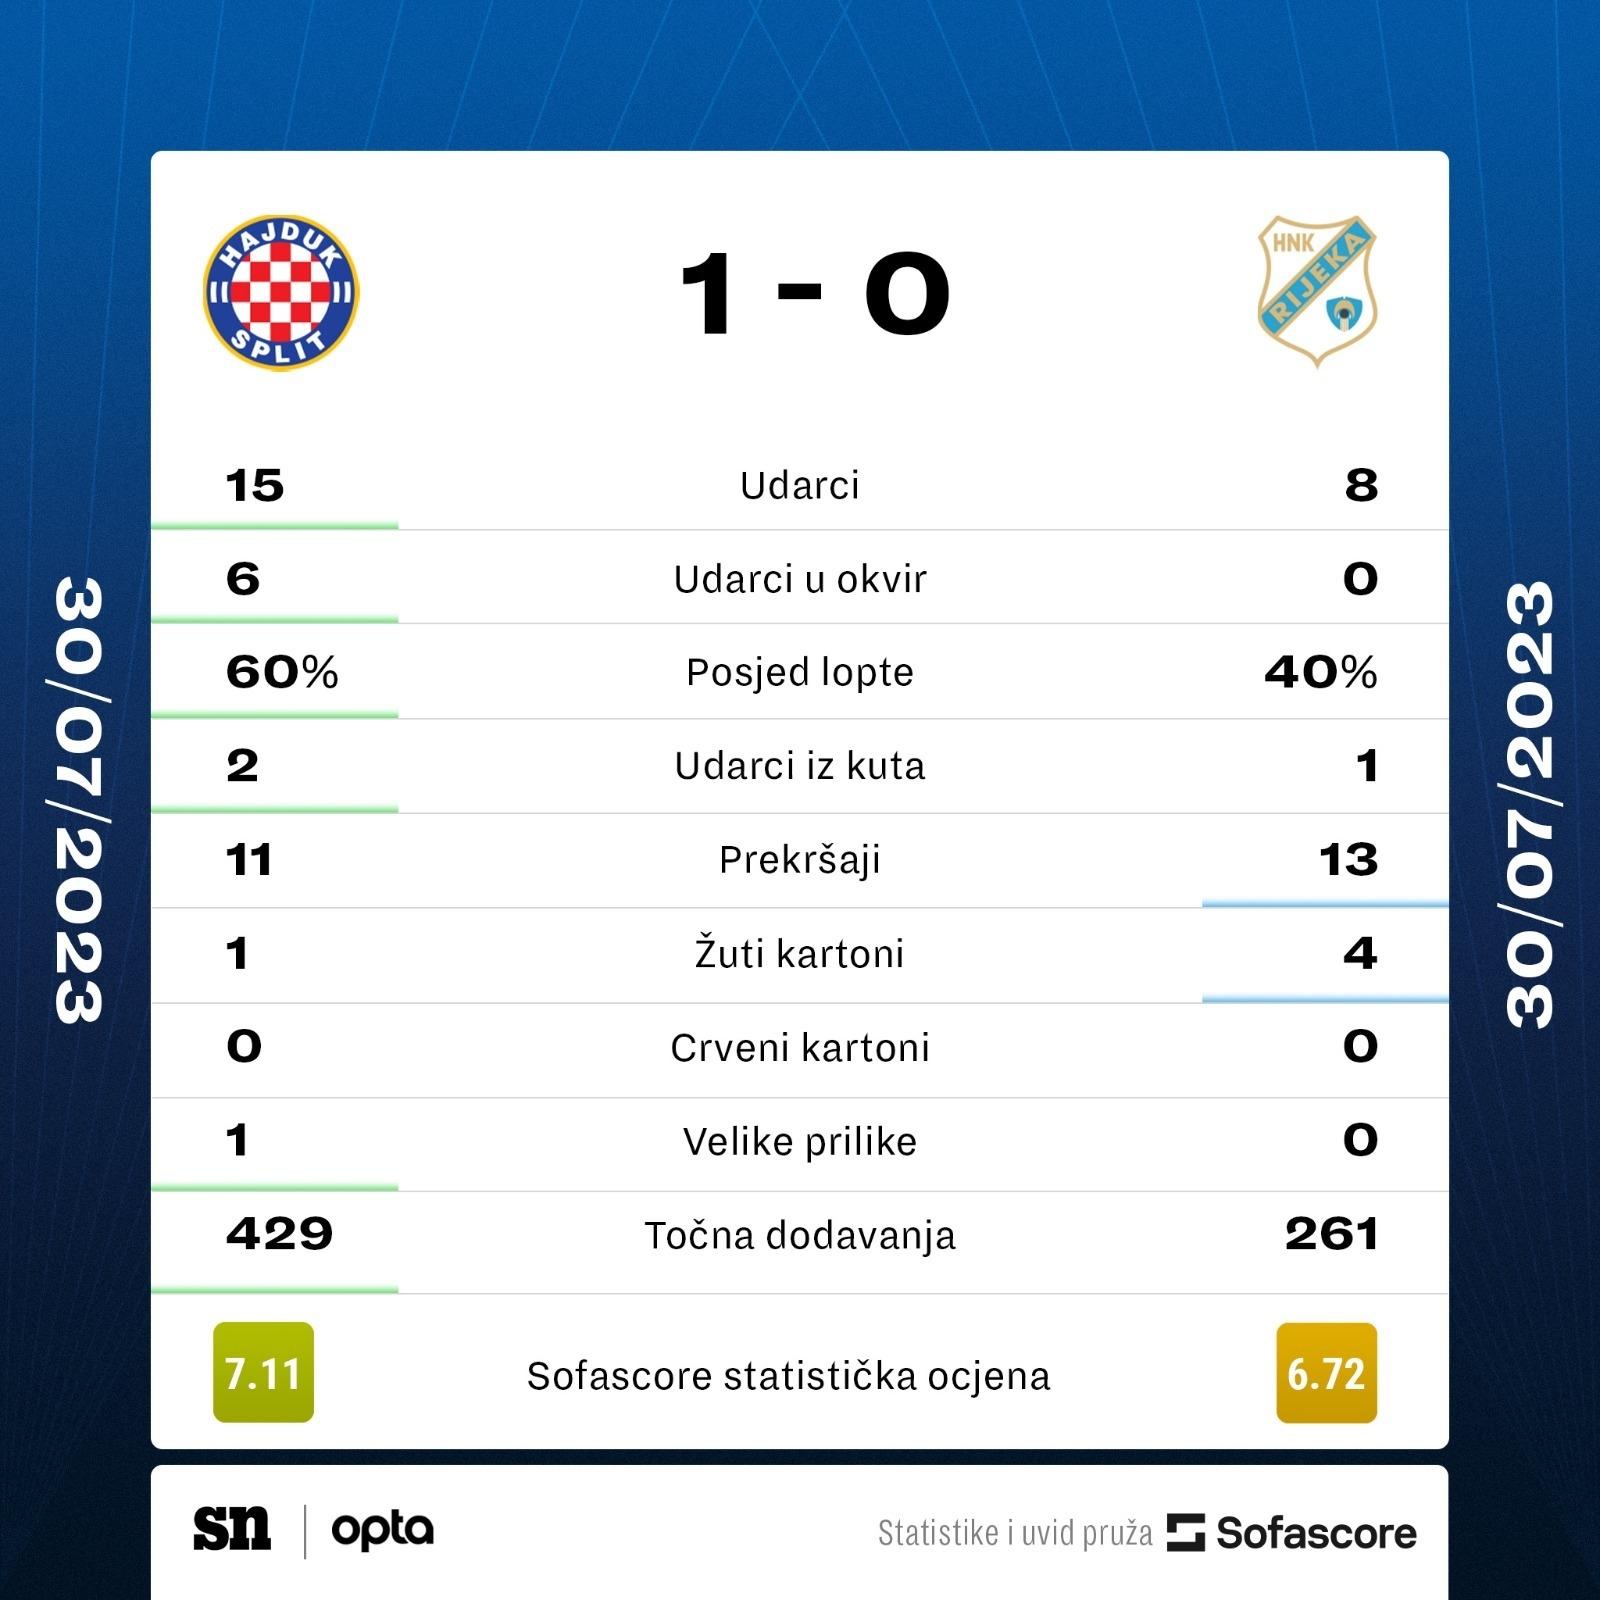 HNK Hajduk Split on X: 50 GOOOOOOOOOOOOL! Rokas Pukštas! Hajduk - Rijeka  1:0!  / X